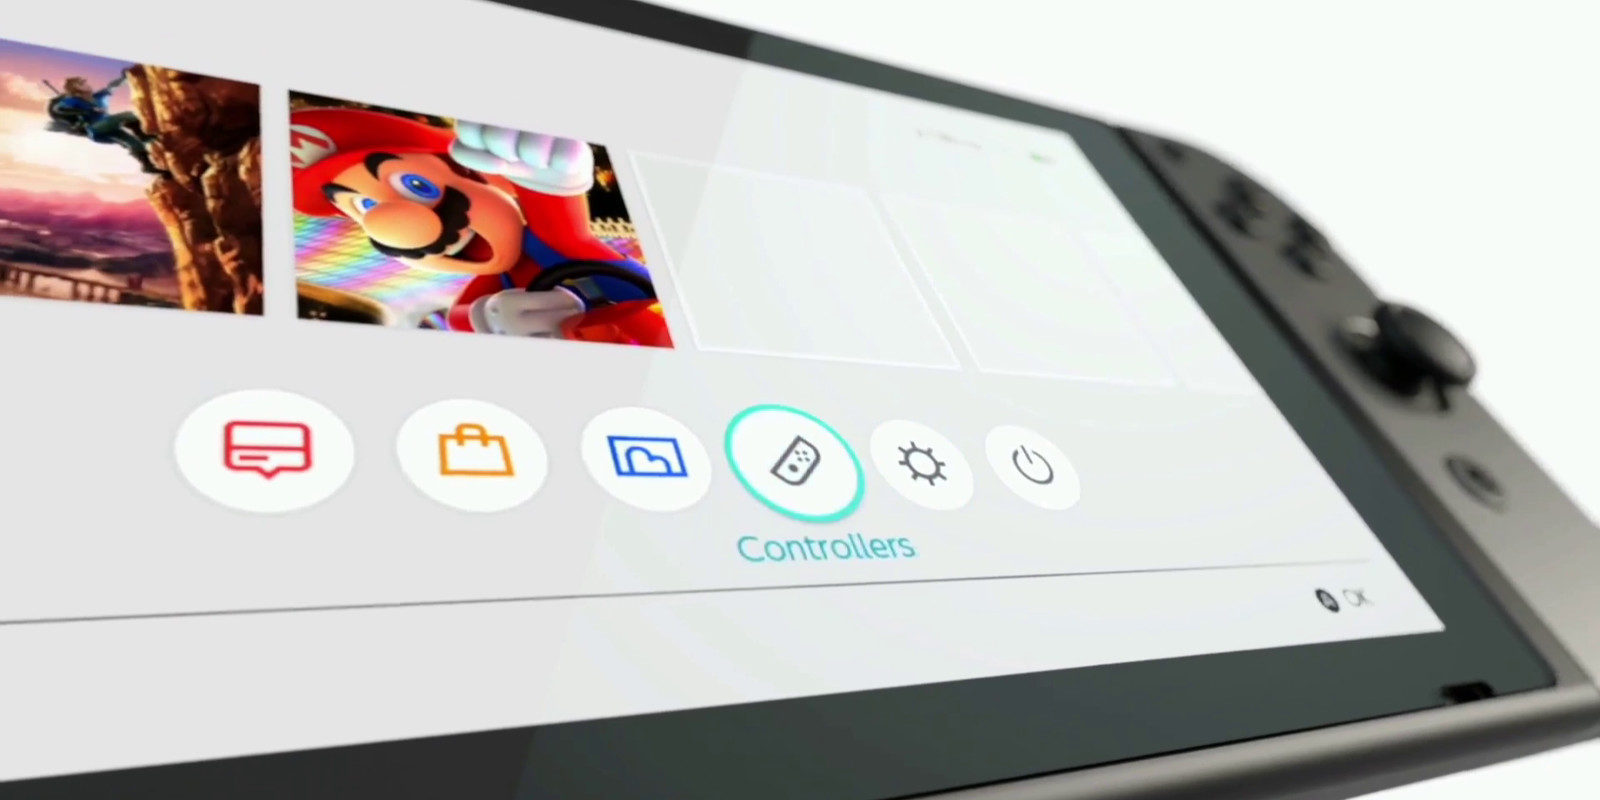 Nintendo Switch: Plan renove y detalles de la eShop - ZR News